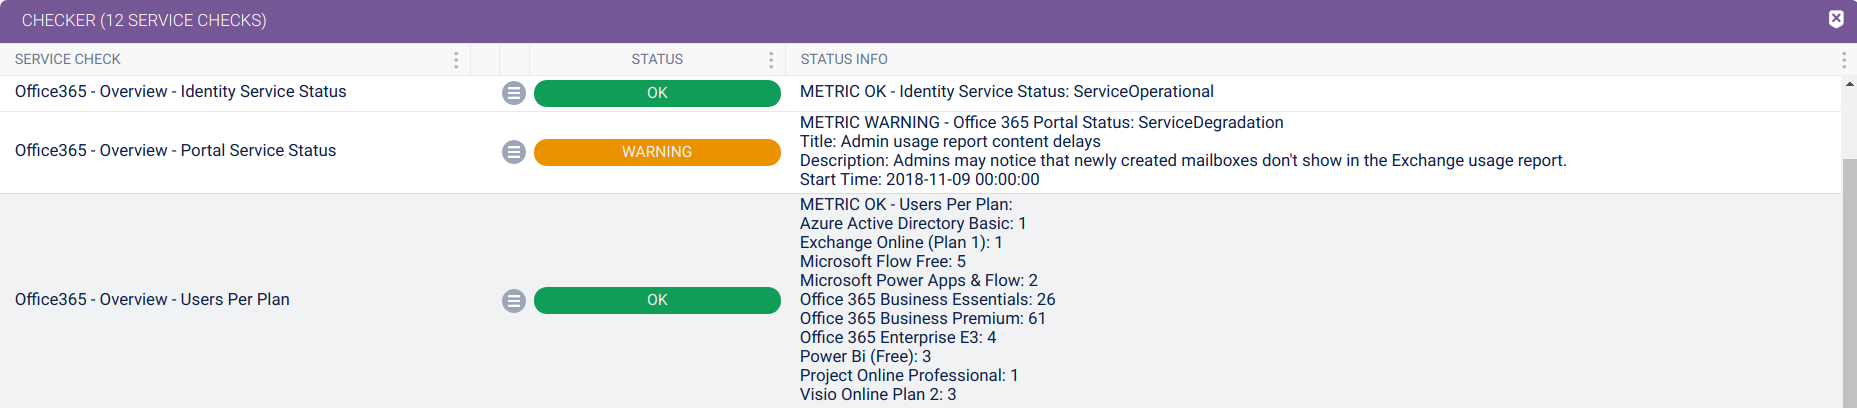 Office 365 Service Checks